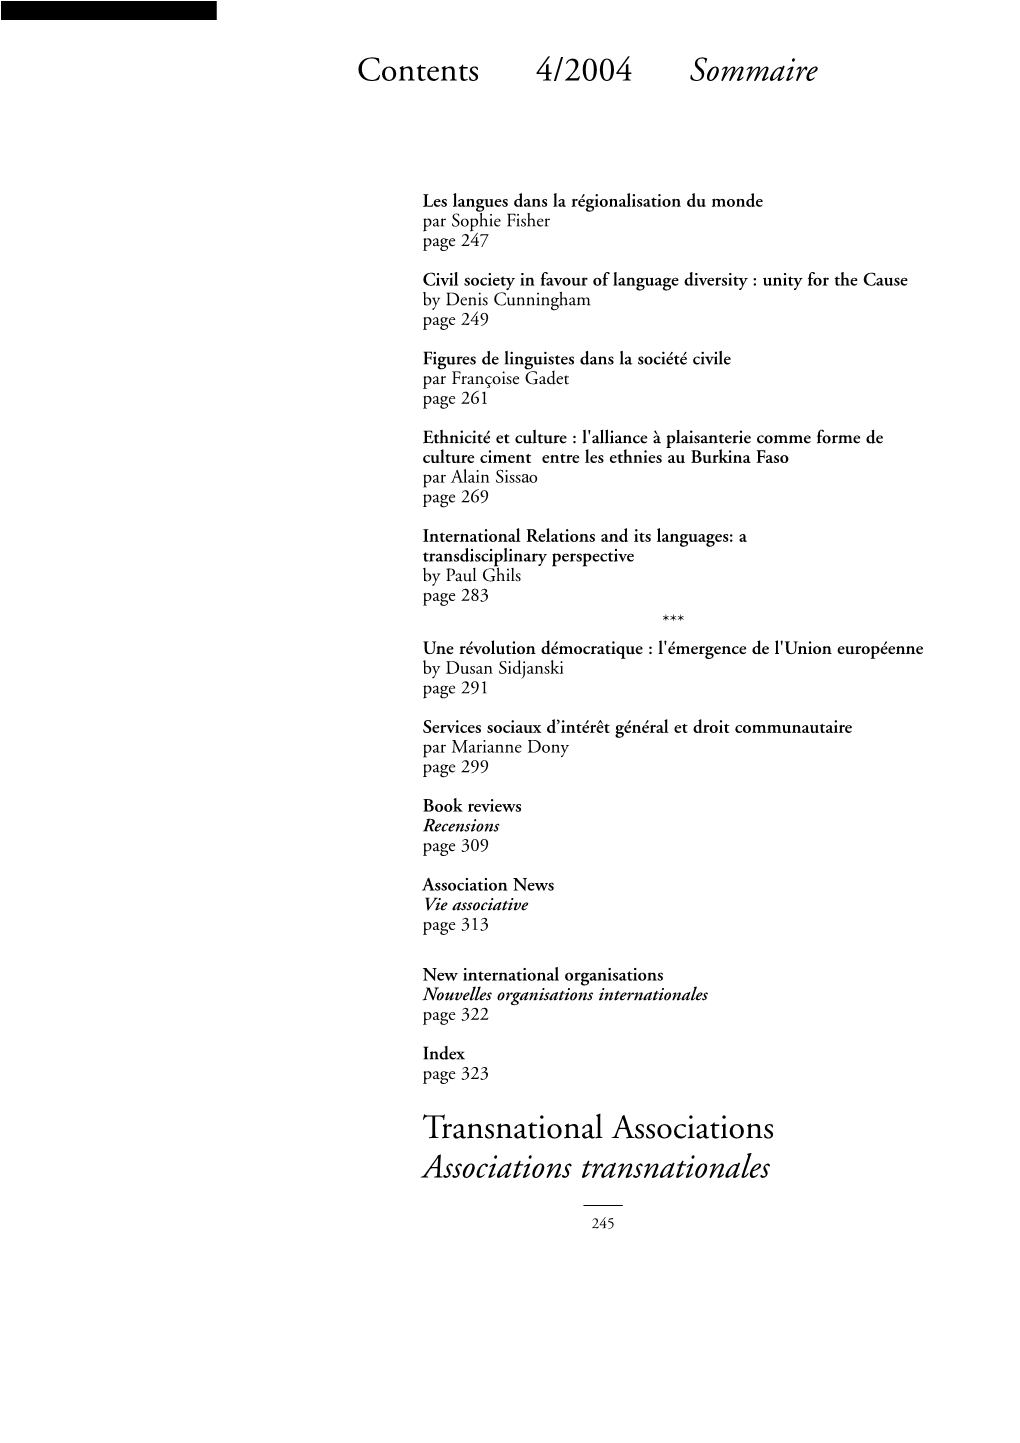 Associations Transnationales